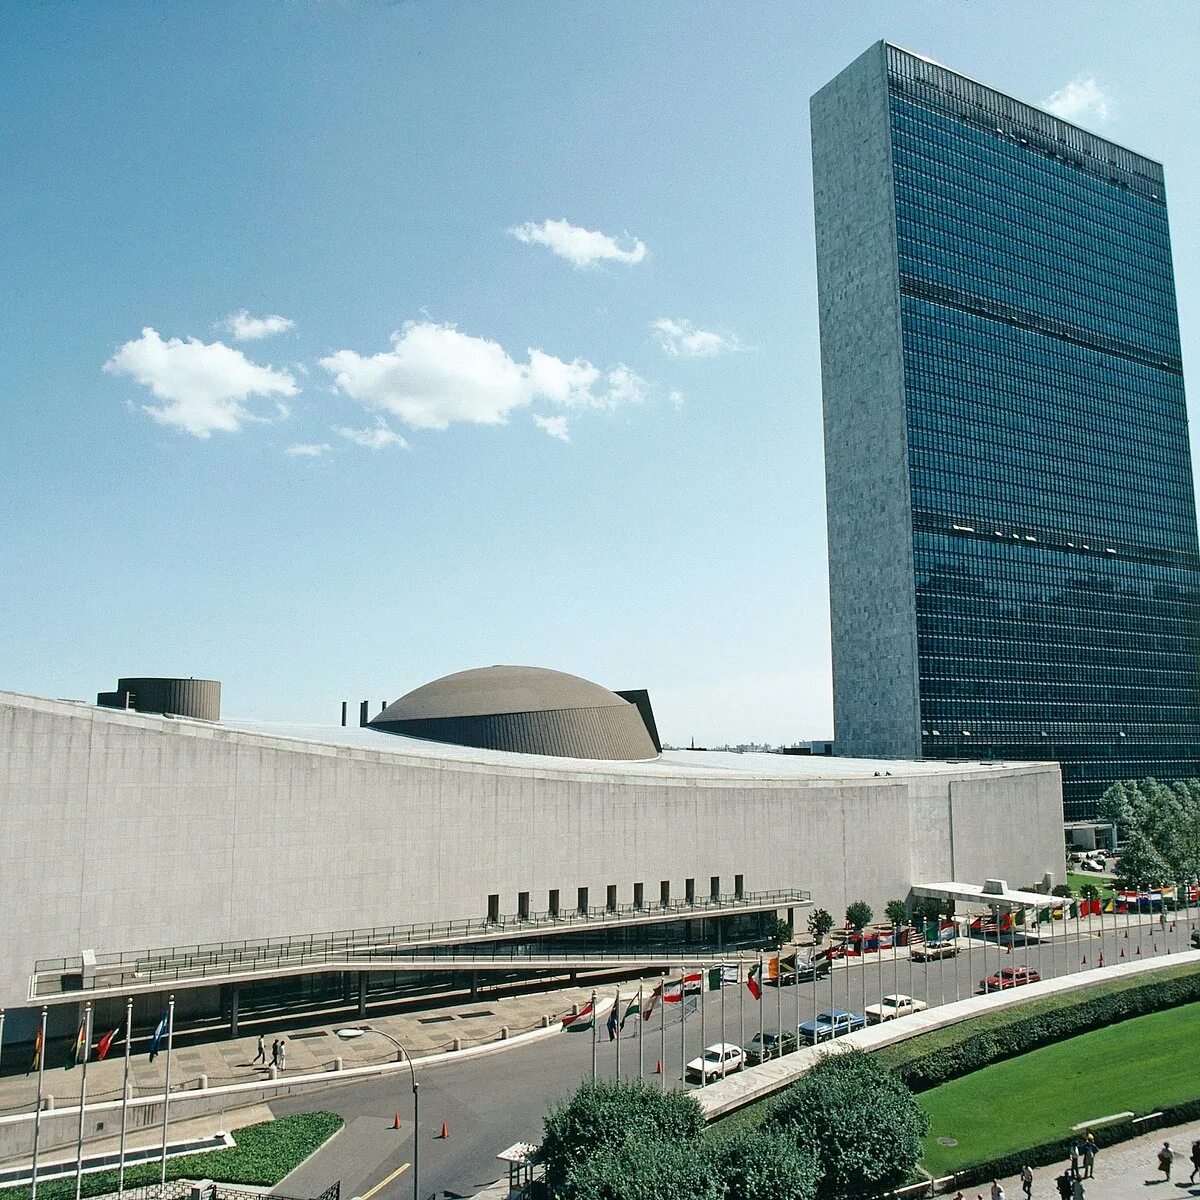 Штаб-квартира ООН В Нью-Йорке. Здание ООН В Нью-Йорке. Здание штаб-квартиры ООН В Нью-Йорке. Ле Корбюзье ООН В Нью- Йорке. Офис оон